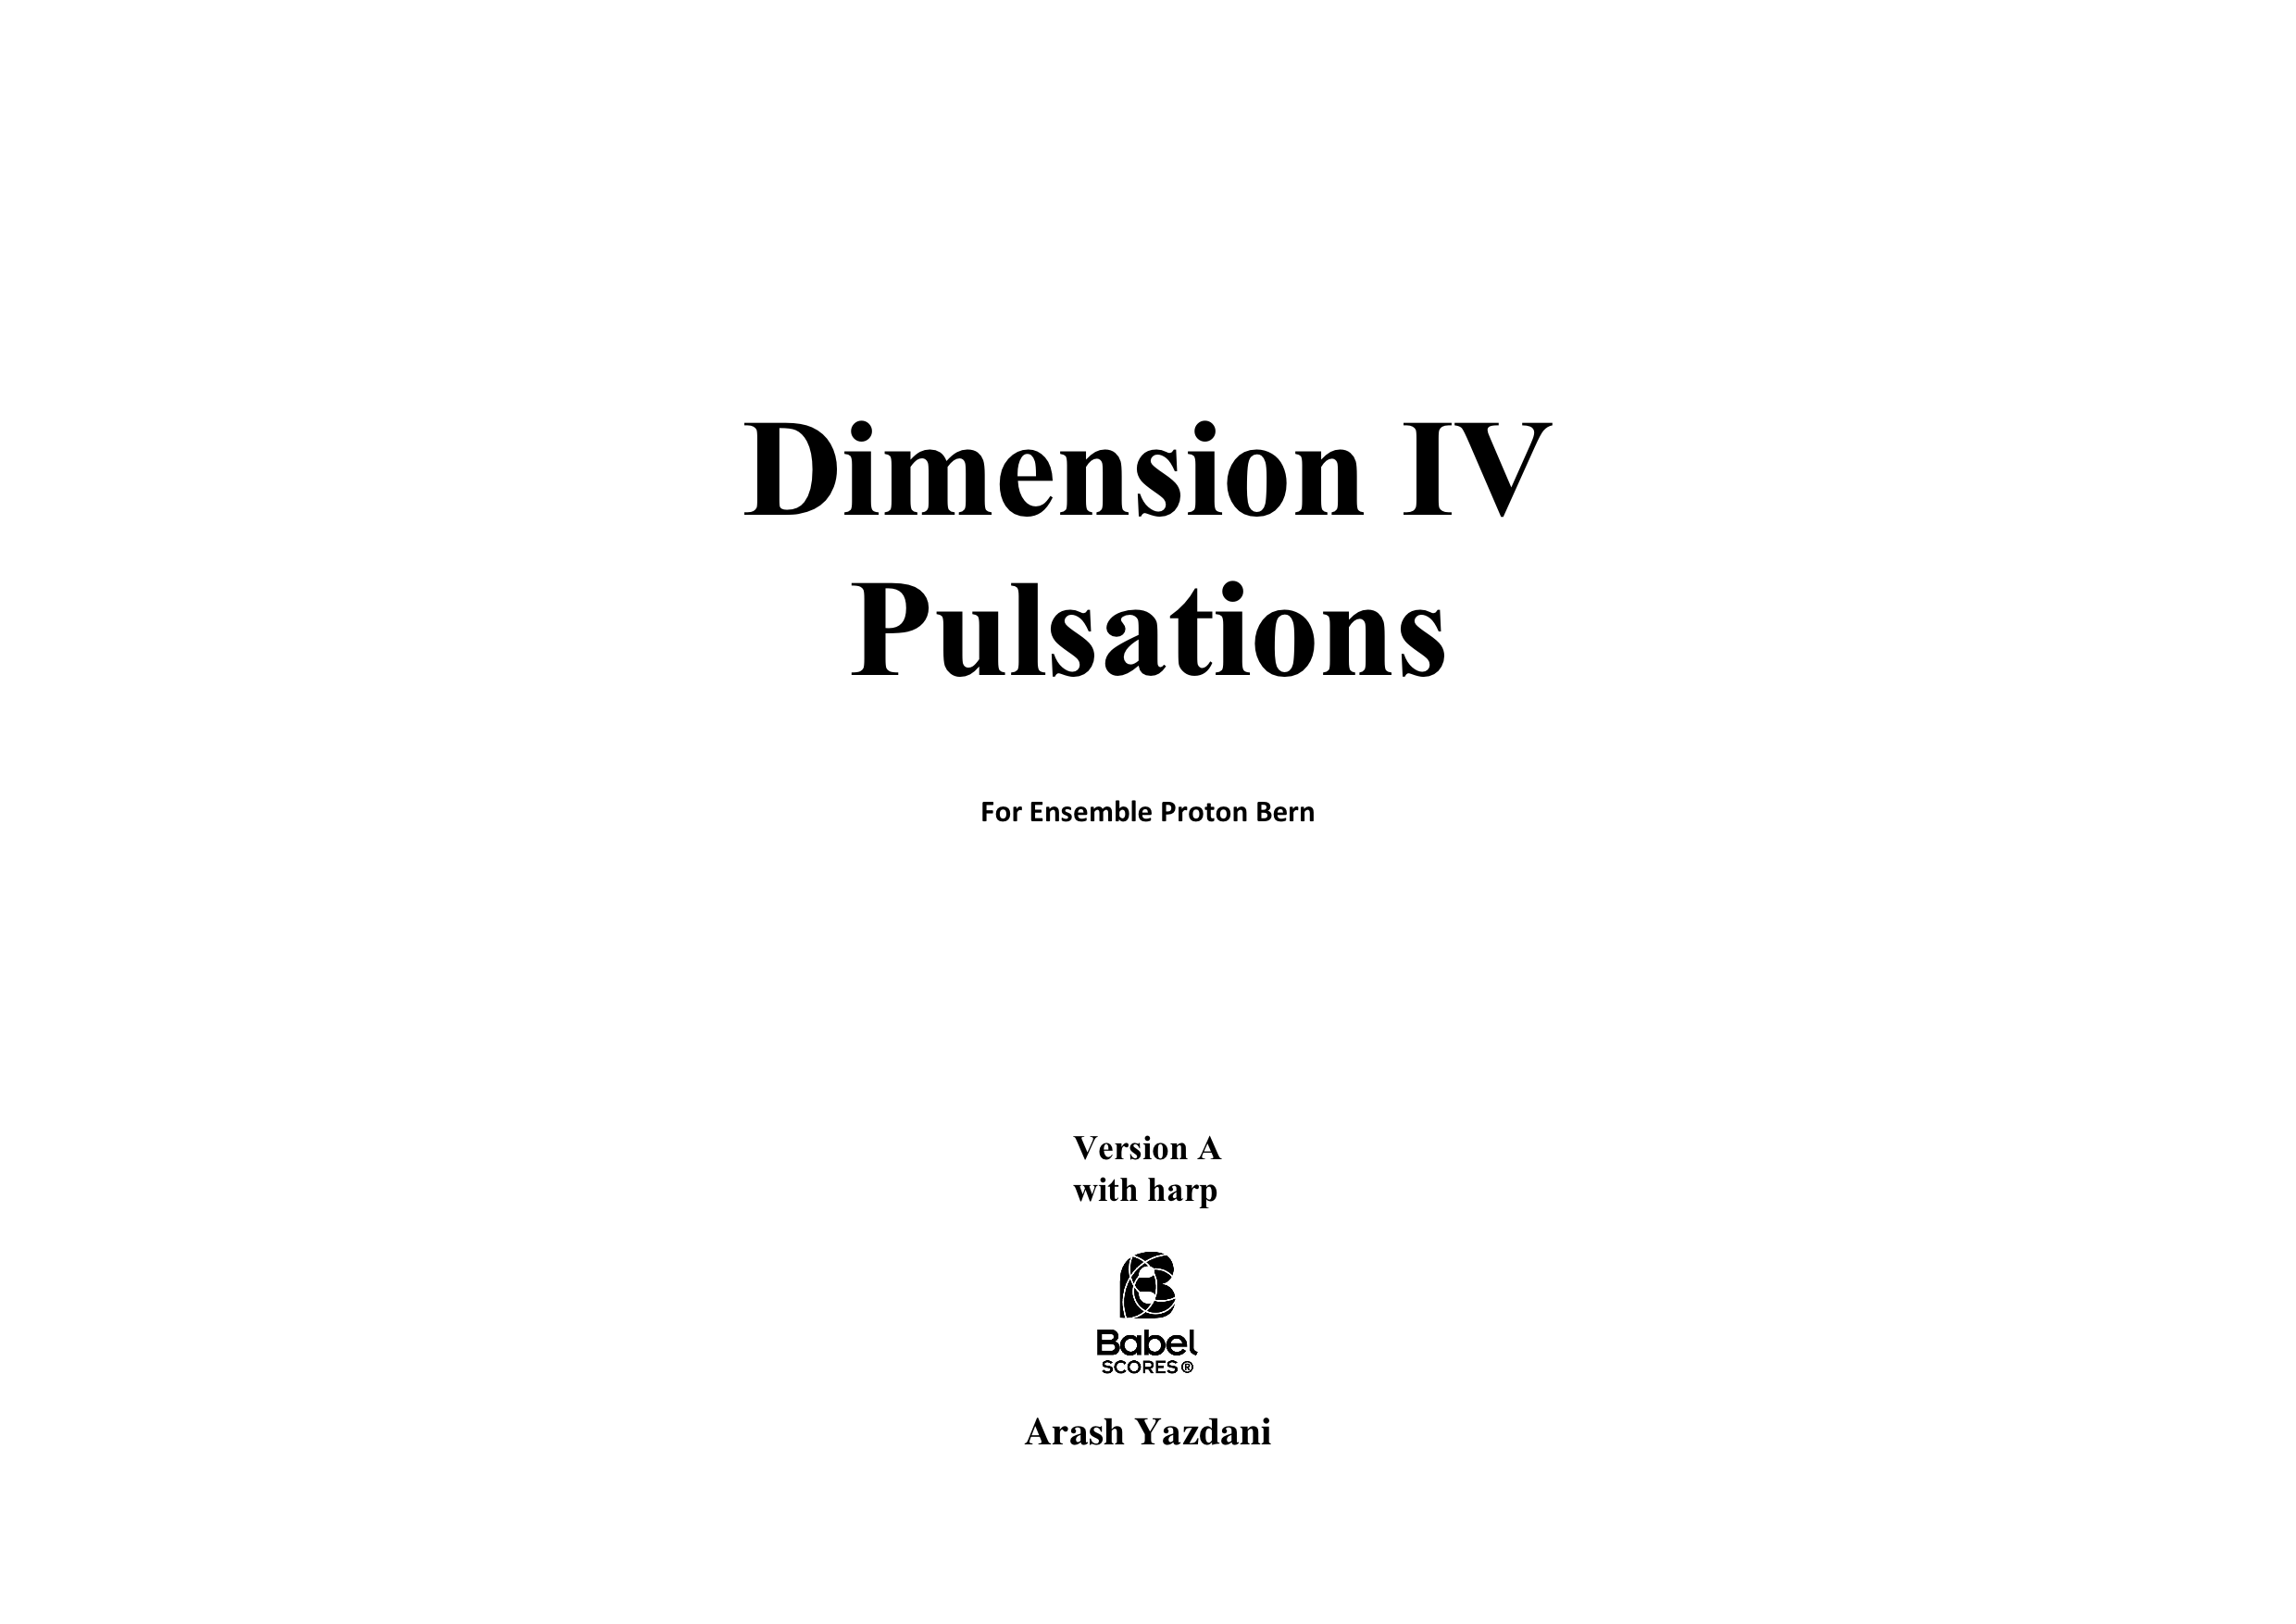 Dimension IV version A A3 z 3 1 711